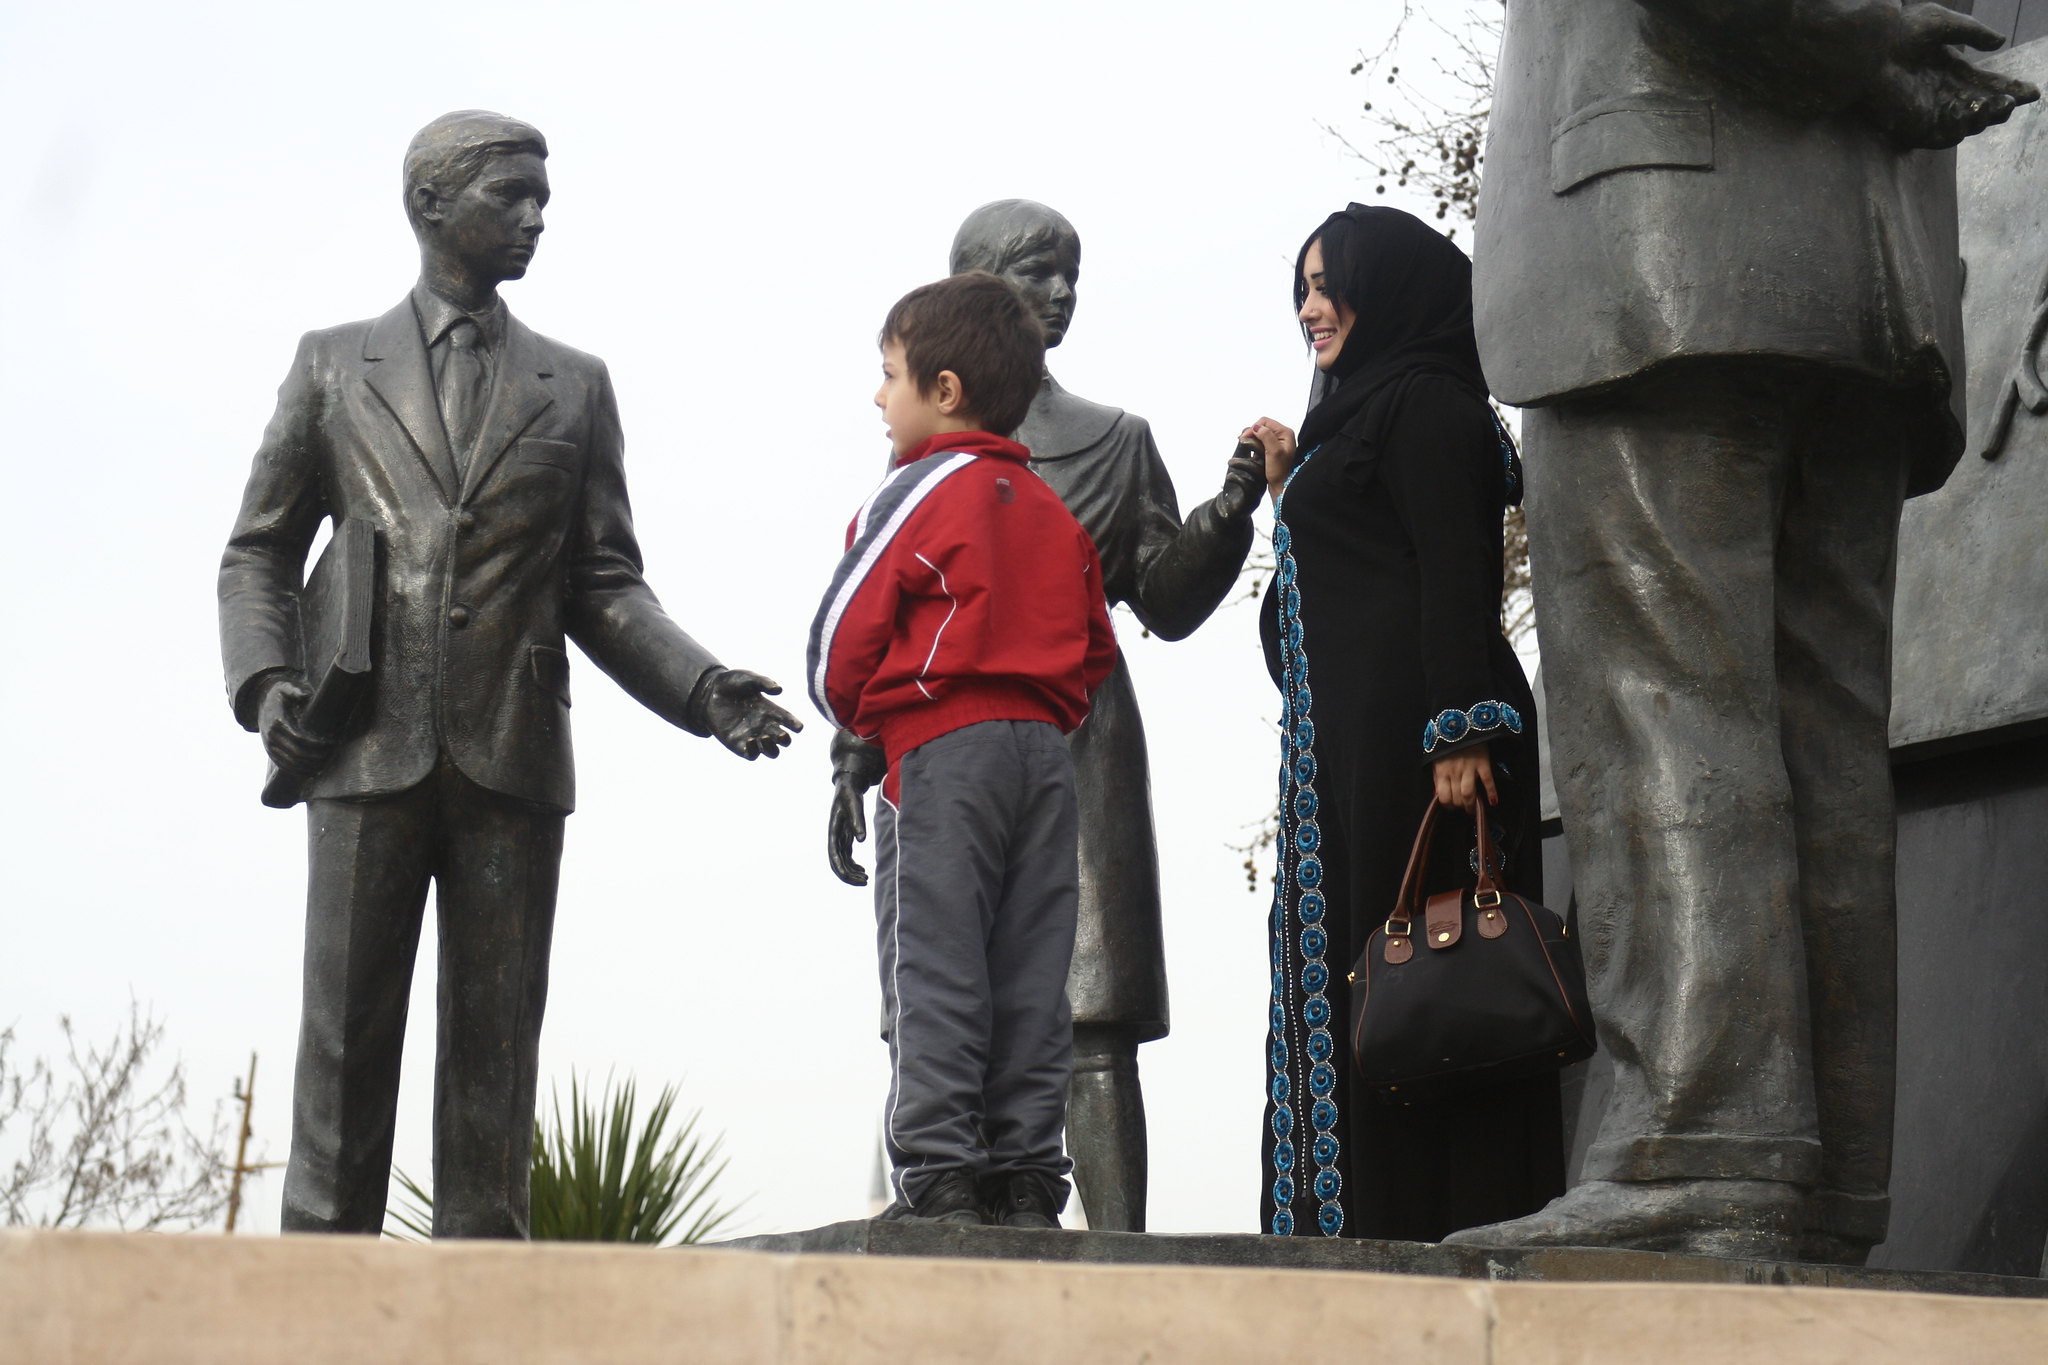 Atatürk the Teacher statue in Kadiköy